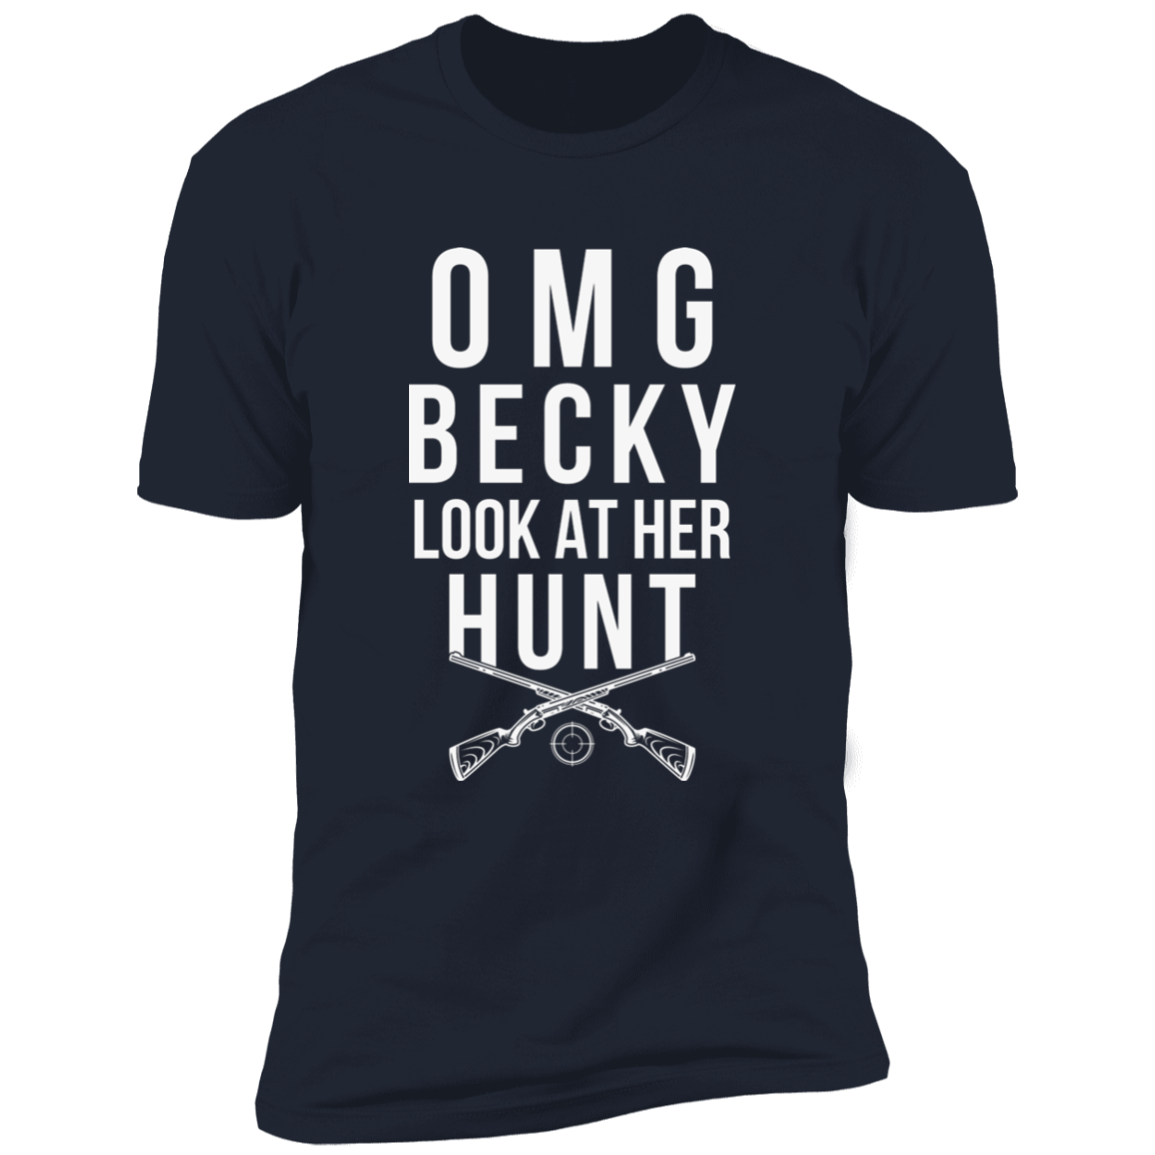 OMG Becky Premium Short Sleeve Tee